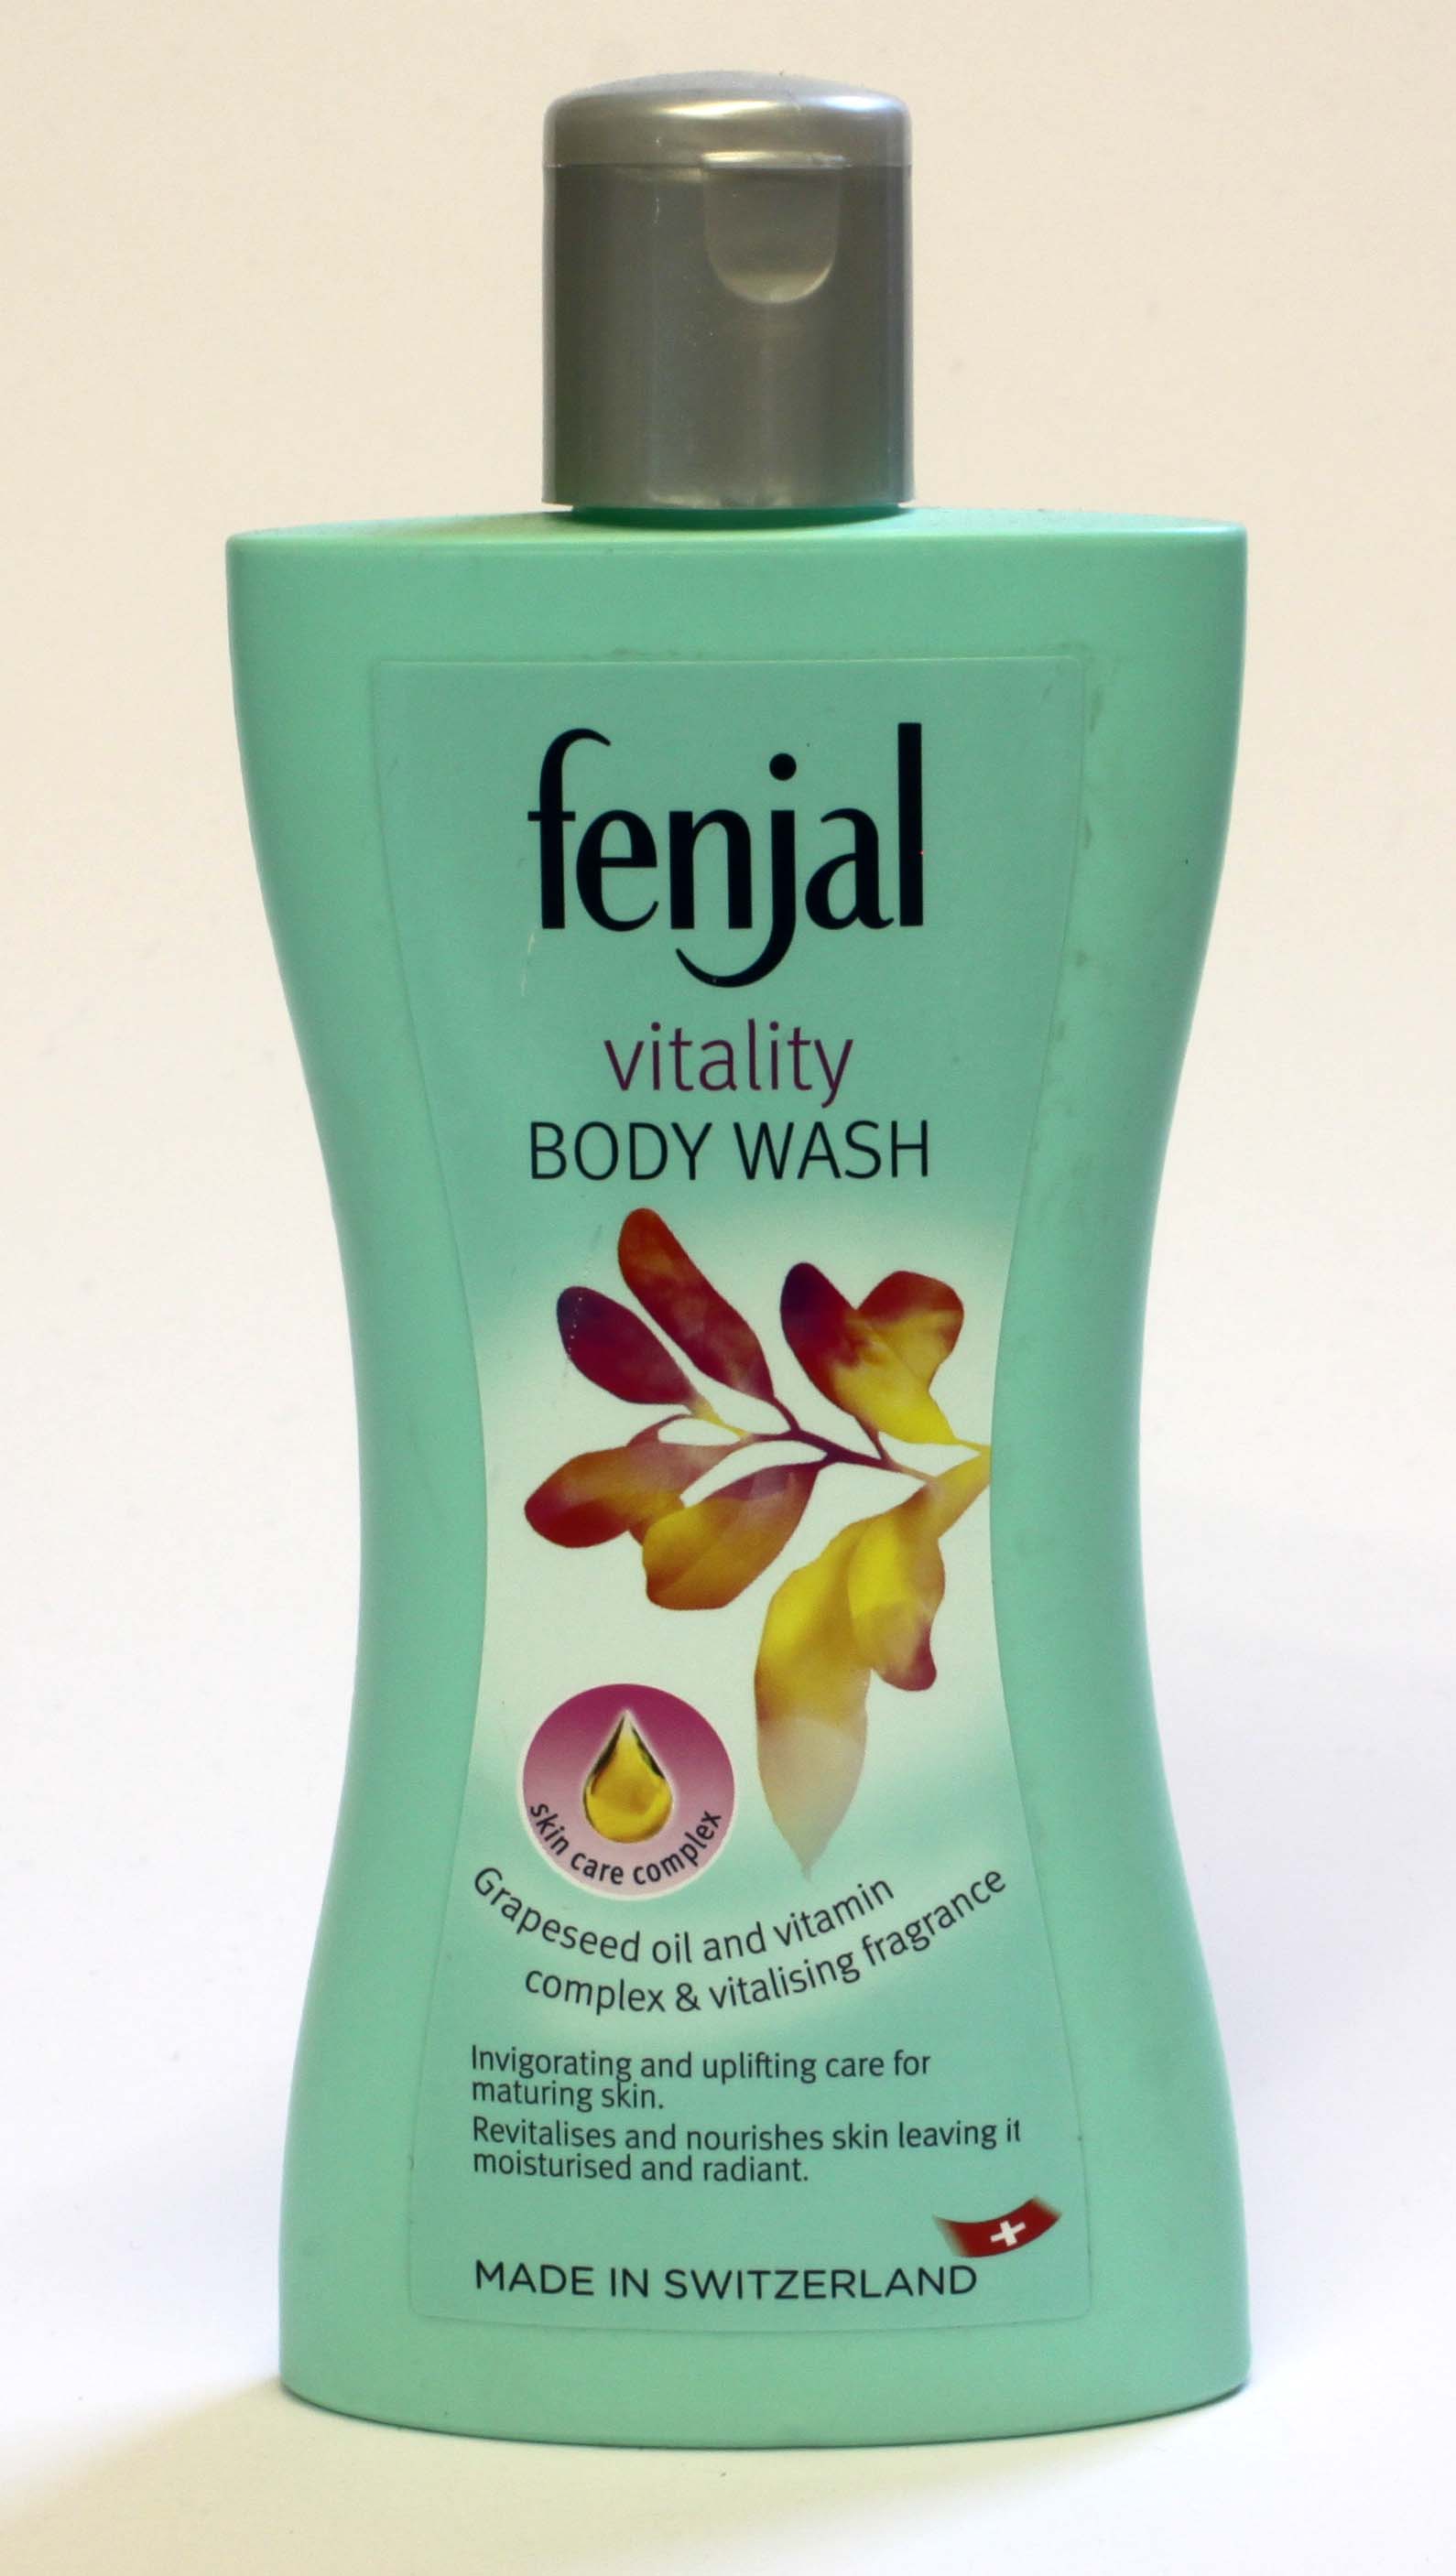 Fenjal Vitality Body Wash - 200ml